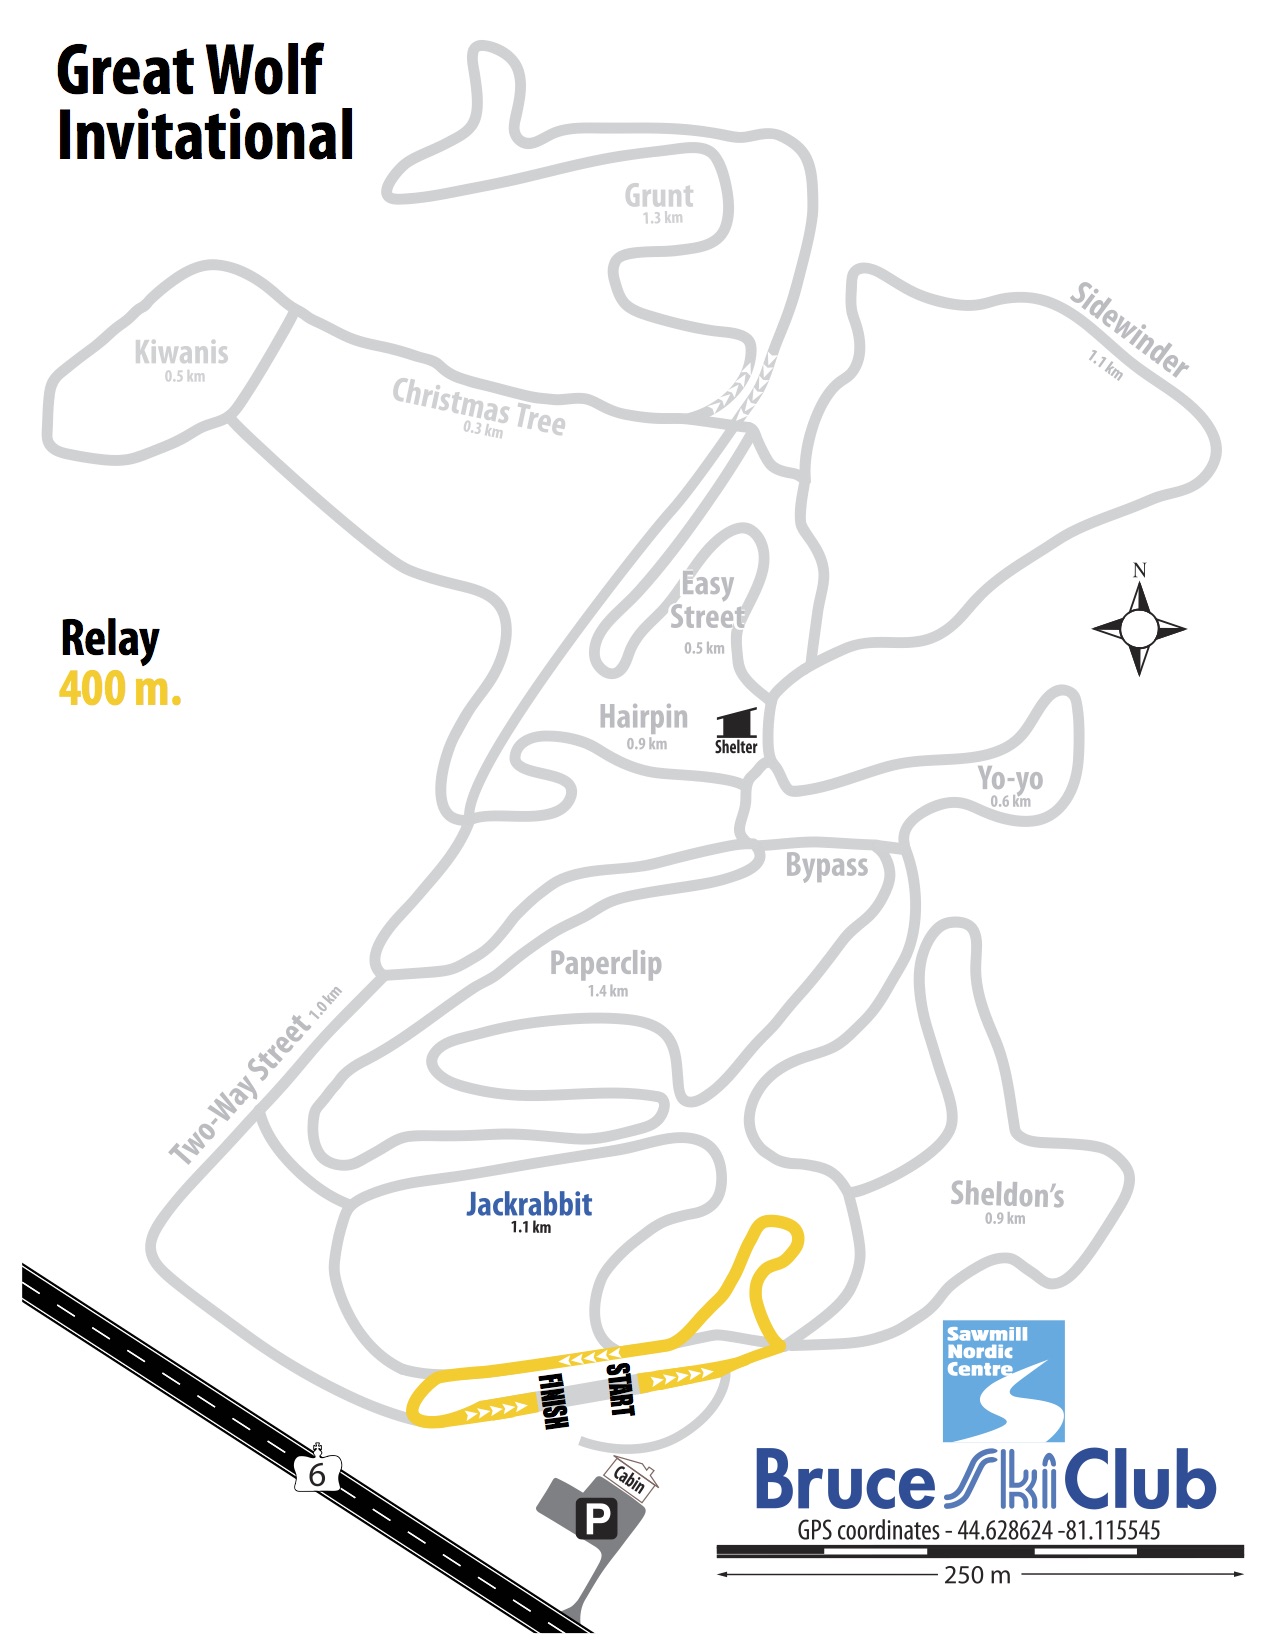 Great Wolf Invitational Cross-Country Ski Race, Hepworth, Ontario - Map: Relay